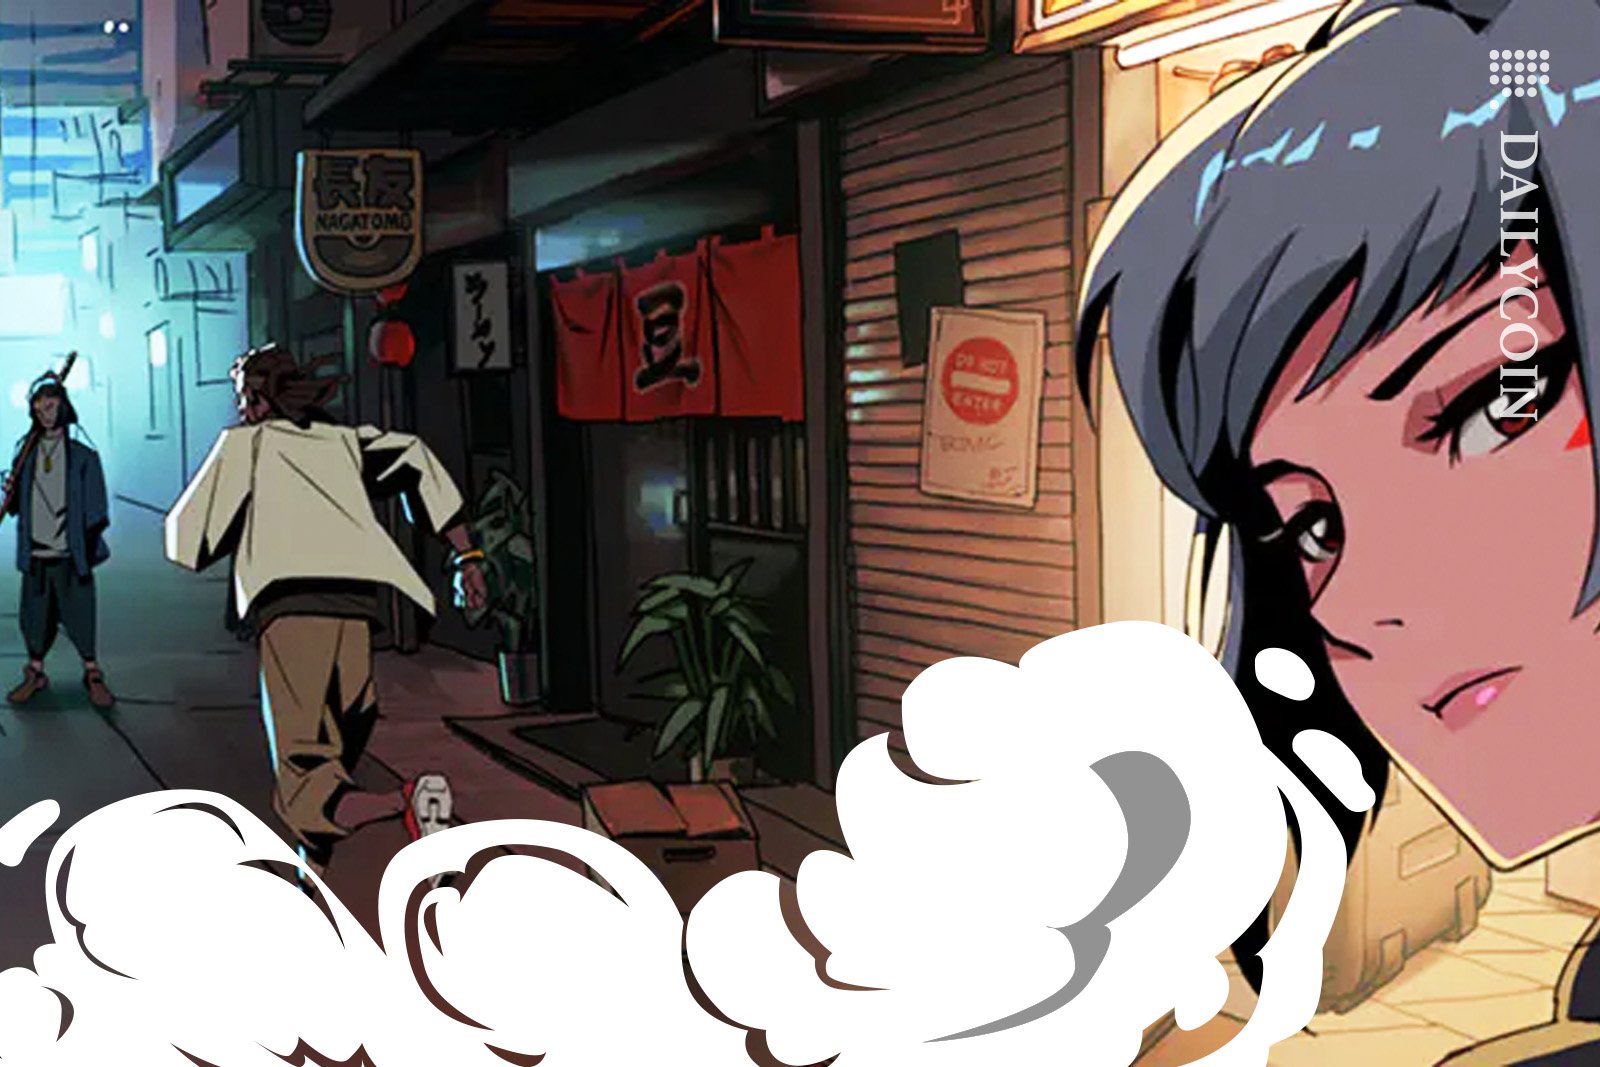 Girl looking back, thief running away in a street scene in Azuki manga style.